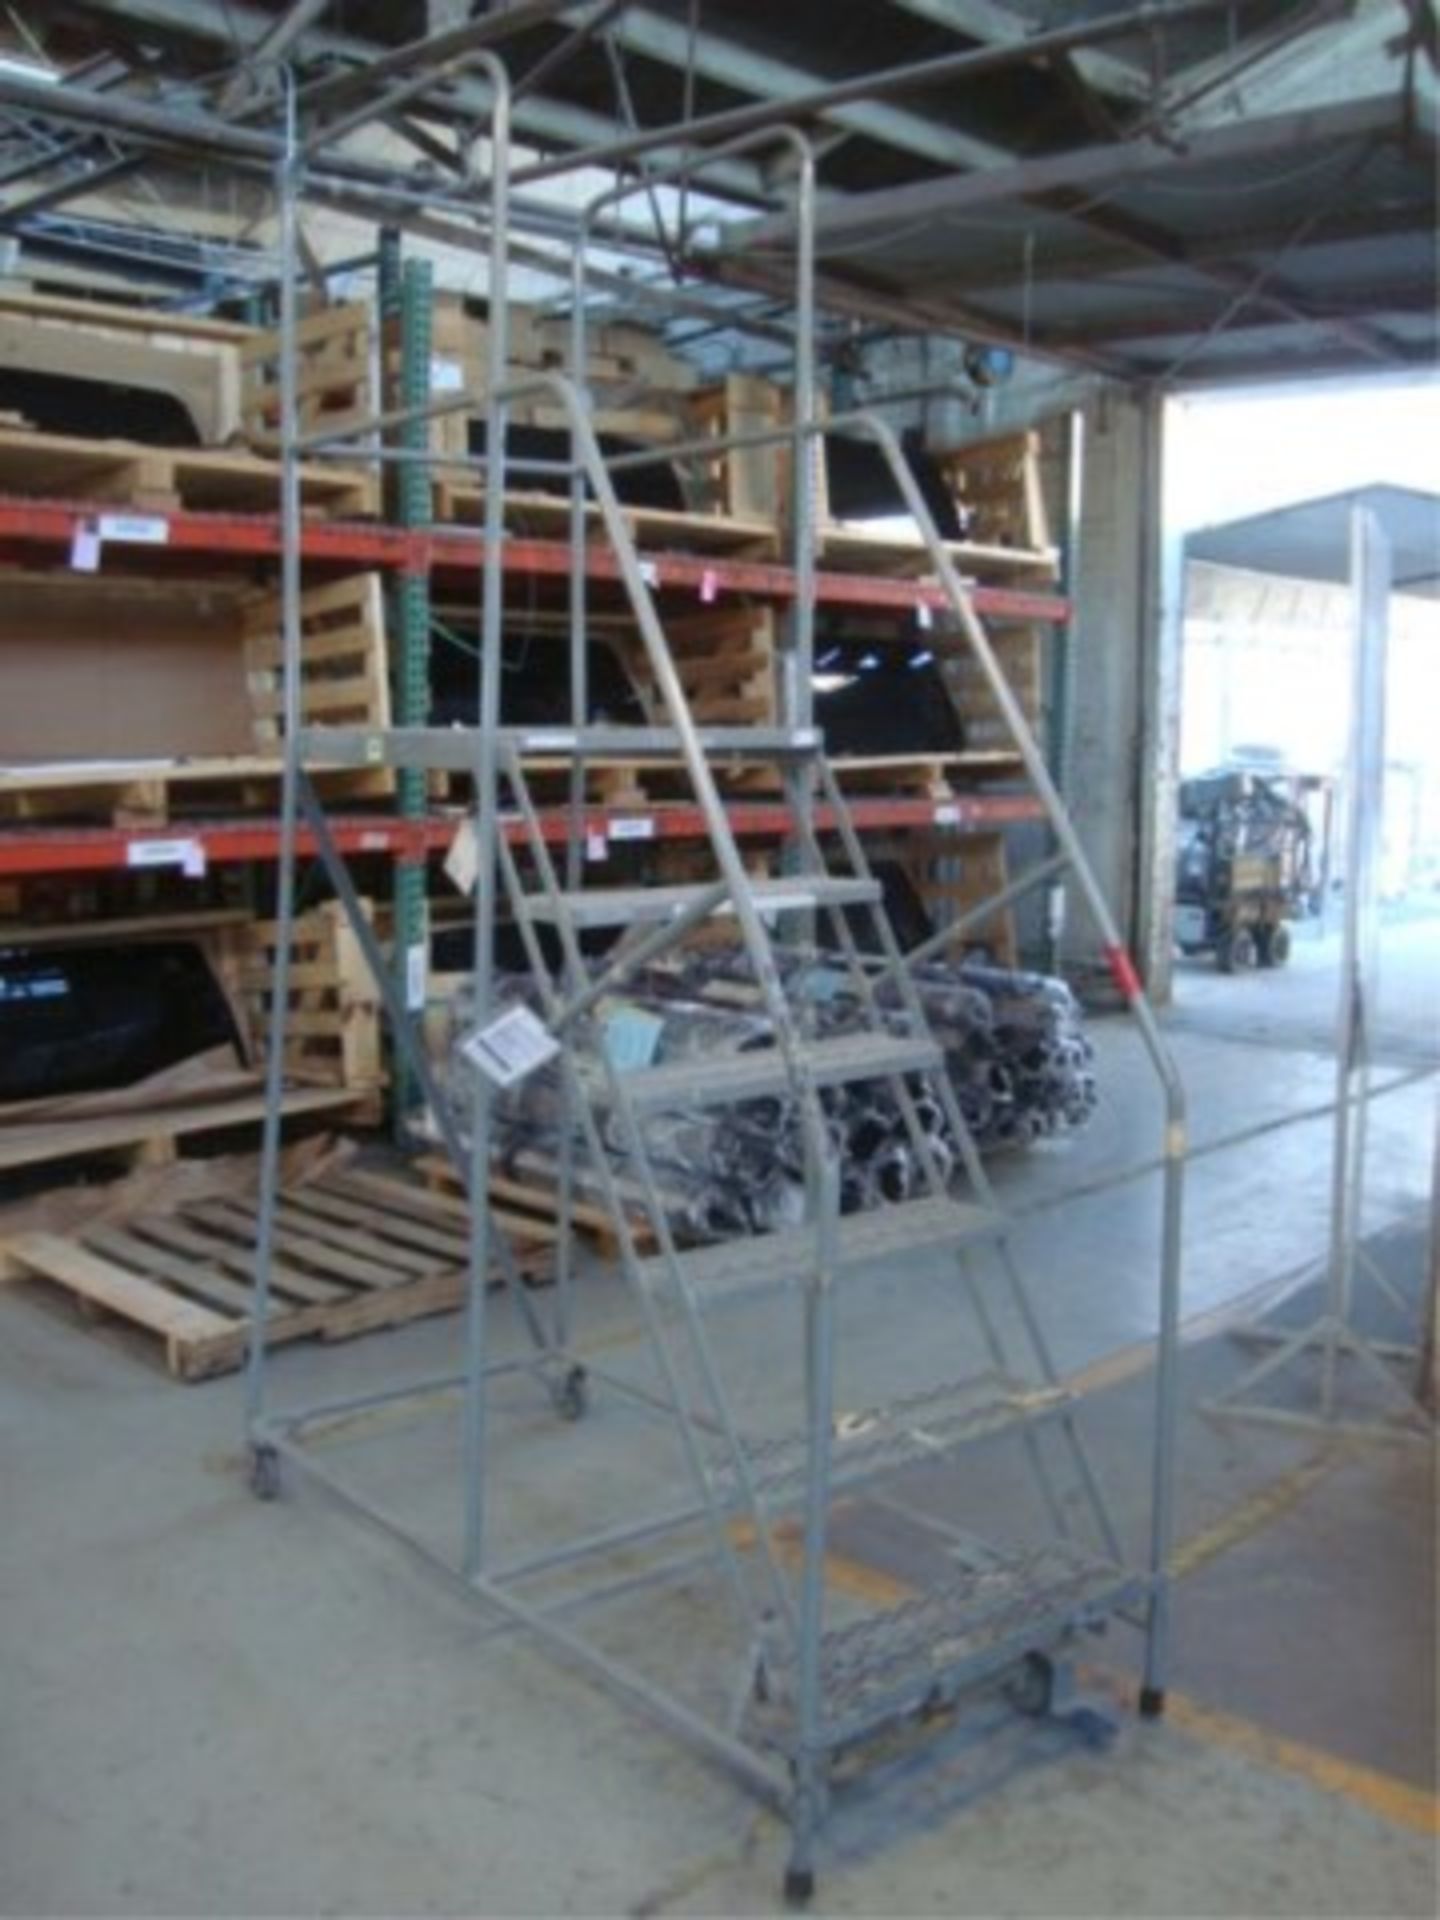 Warehouse Ladders